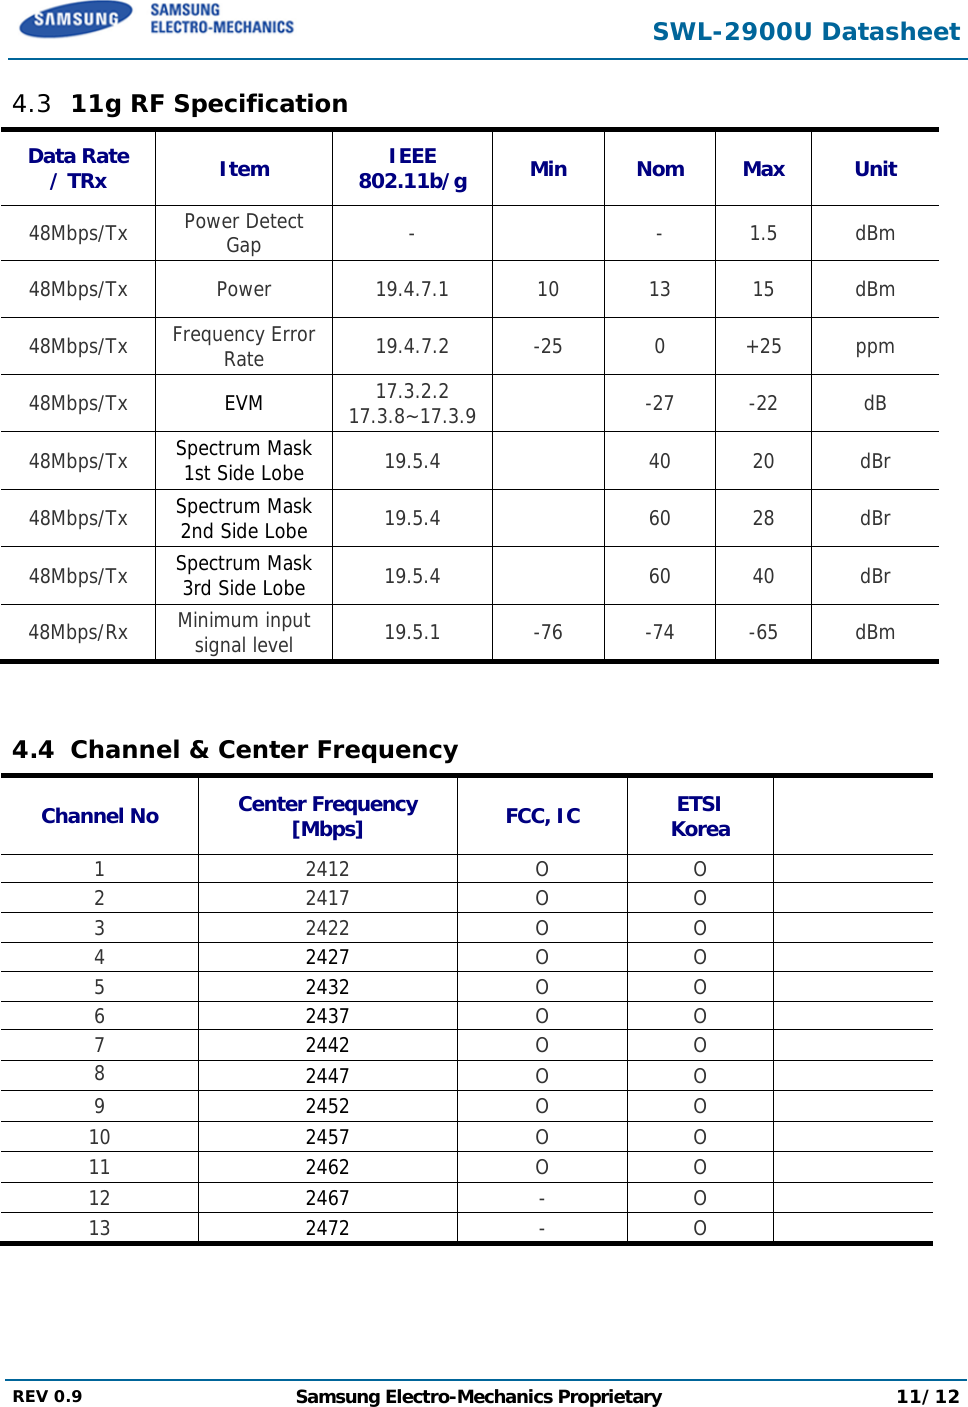  SWL-2900U Datasheet  REV 0.9  Samsung Electro-Mechanics Proprietary 11/12  4.3 11g RF Specification  Data Rate / TRx  Item  IEEE 802.11b/g  Min Nom Max Unit 48Mbps/Tx Power Detect Gap  -  - 1.5 dBm 48Mbps/Tx Power 19.4.7.1 10 13 15 dBm 48Mbps/Tx Frequency Error Rate  19.4.7.2 -25  0 +25 ppm 48Mbps/Tx EVM  17.3.2.2 17.3.8~17.3.9  -27 -22 dB 48Mbps/Tx Spectrum Mask 1st Side Lobe  19.5.4  40 20 dBr 48Mbps/Tx Spectrum Mask 2nd Side Lobe  19.5.4  60 28 dBr 48Mbps/Tx Spectrum Mask 3rd Side Lobe  19.5.4  60 40 dBr 48Mbps/Rx  Minimum input signal level 19.5.1 -76 -74 -65 dBm  4.4 Channel &amp; Center Frequency Channel No  Center Frequency [Mbps]  FCC, IC  ETSI Korea   1 2412 O O  2 2417 O O  3 2422 O O  4 2427 O O  5 2432 O O  6 2437 O O  7 2442 O O  8  2447  O O  9  2452  O O  10  2457  O O  11  2462  O O  12  2467  - O  13  2472  - O  